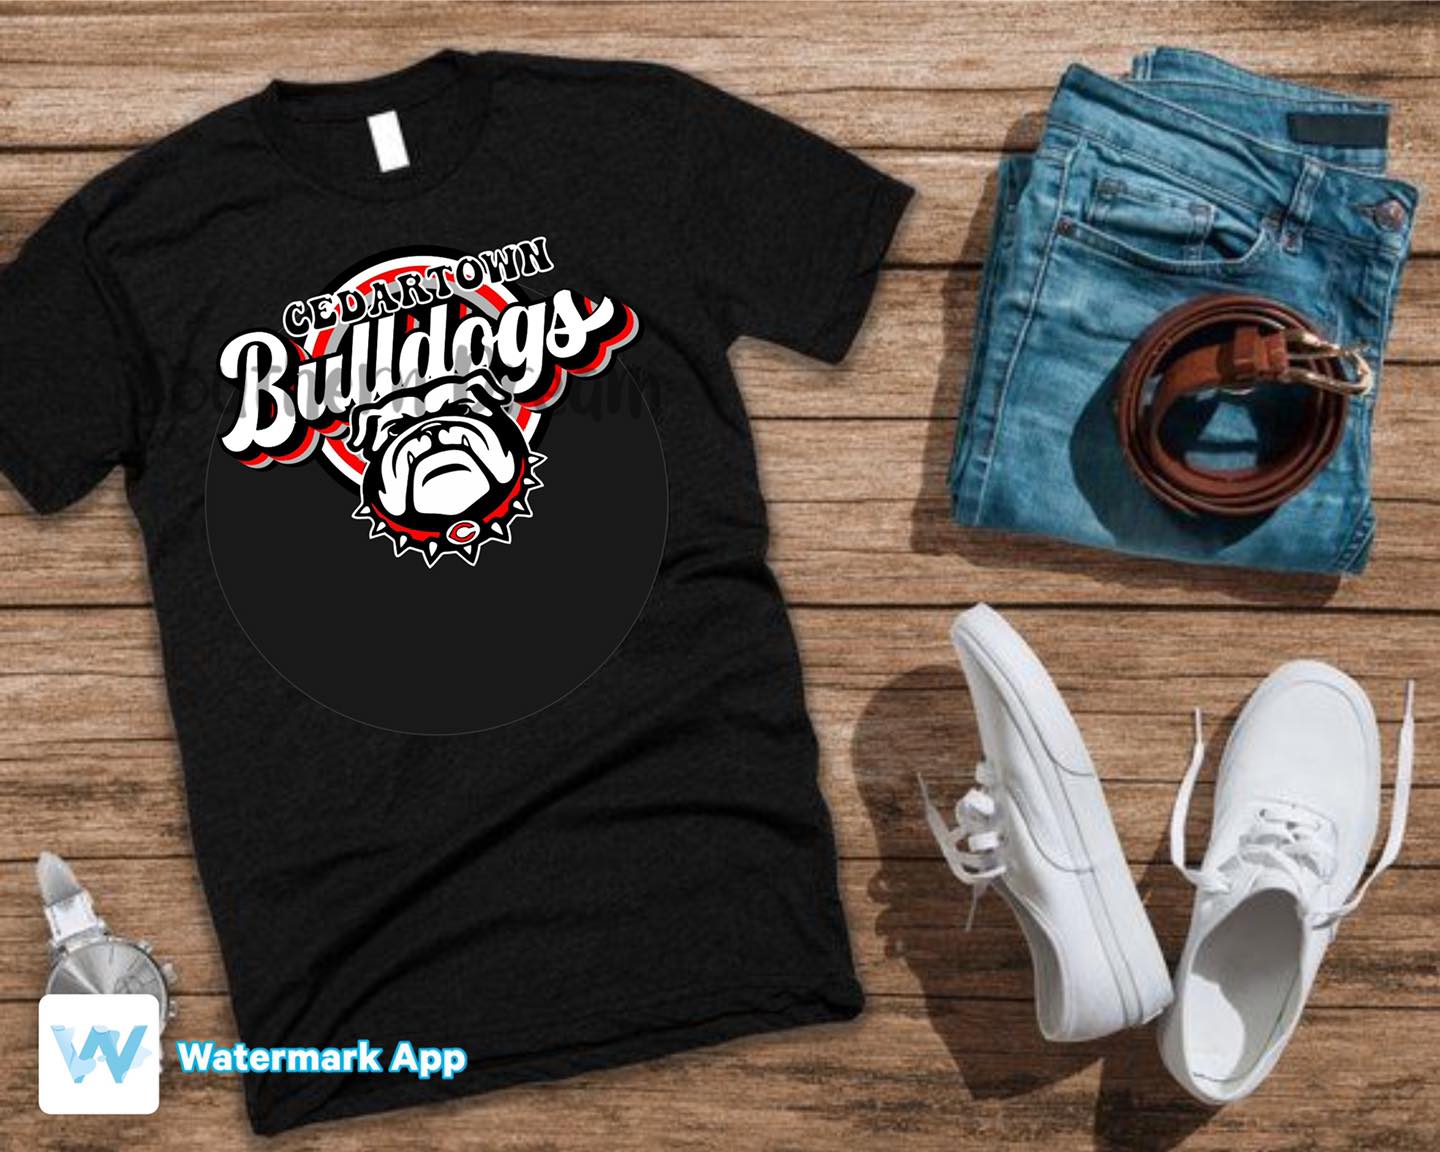 Cedartown Bulldog Retro Groovy T-Shirt